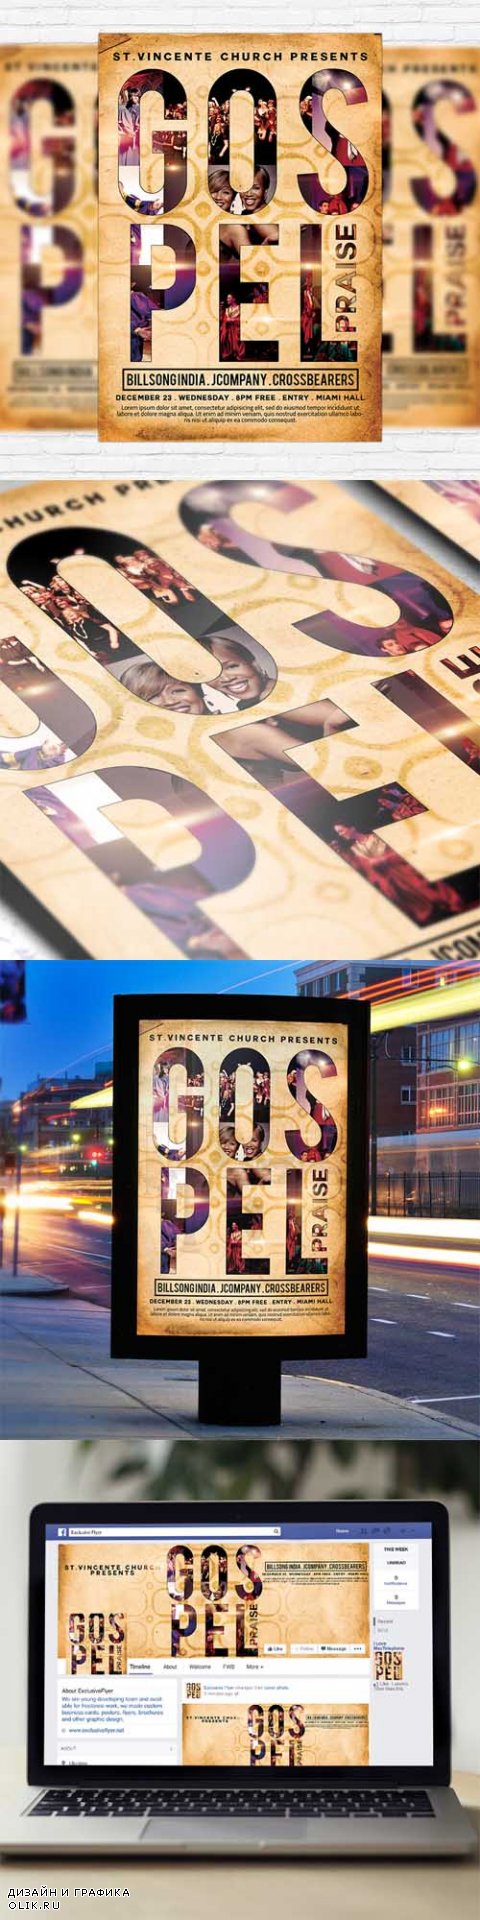 Flyer Template - Gospel Praise + Facebook Cover